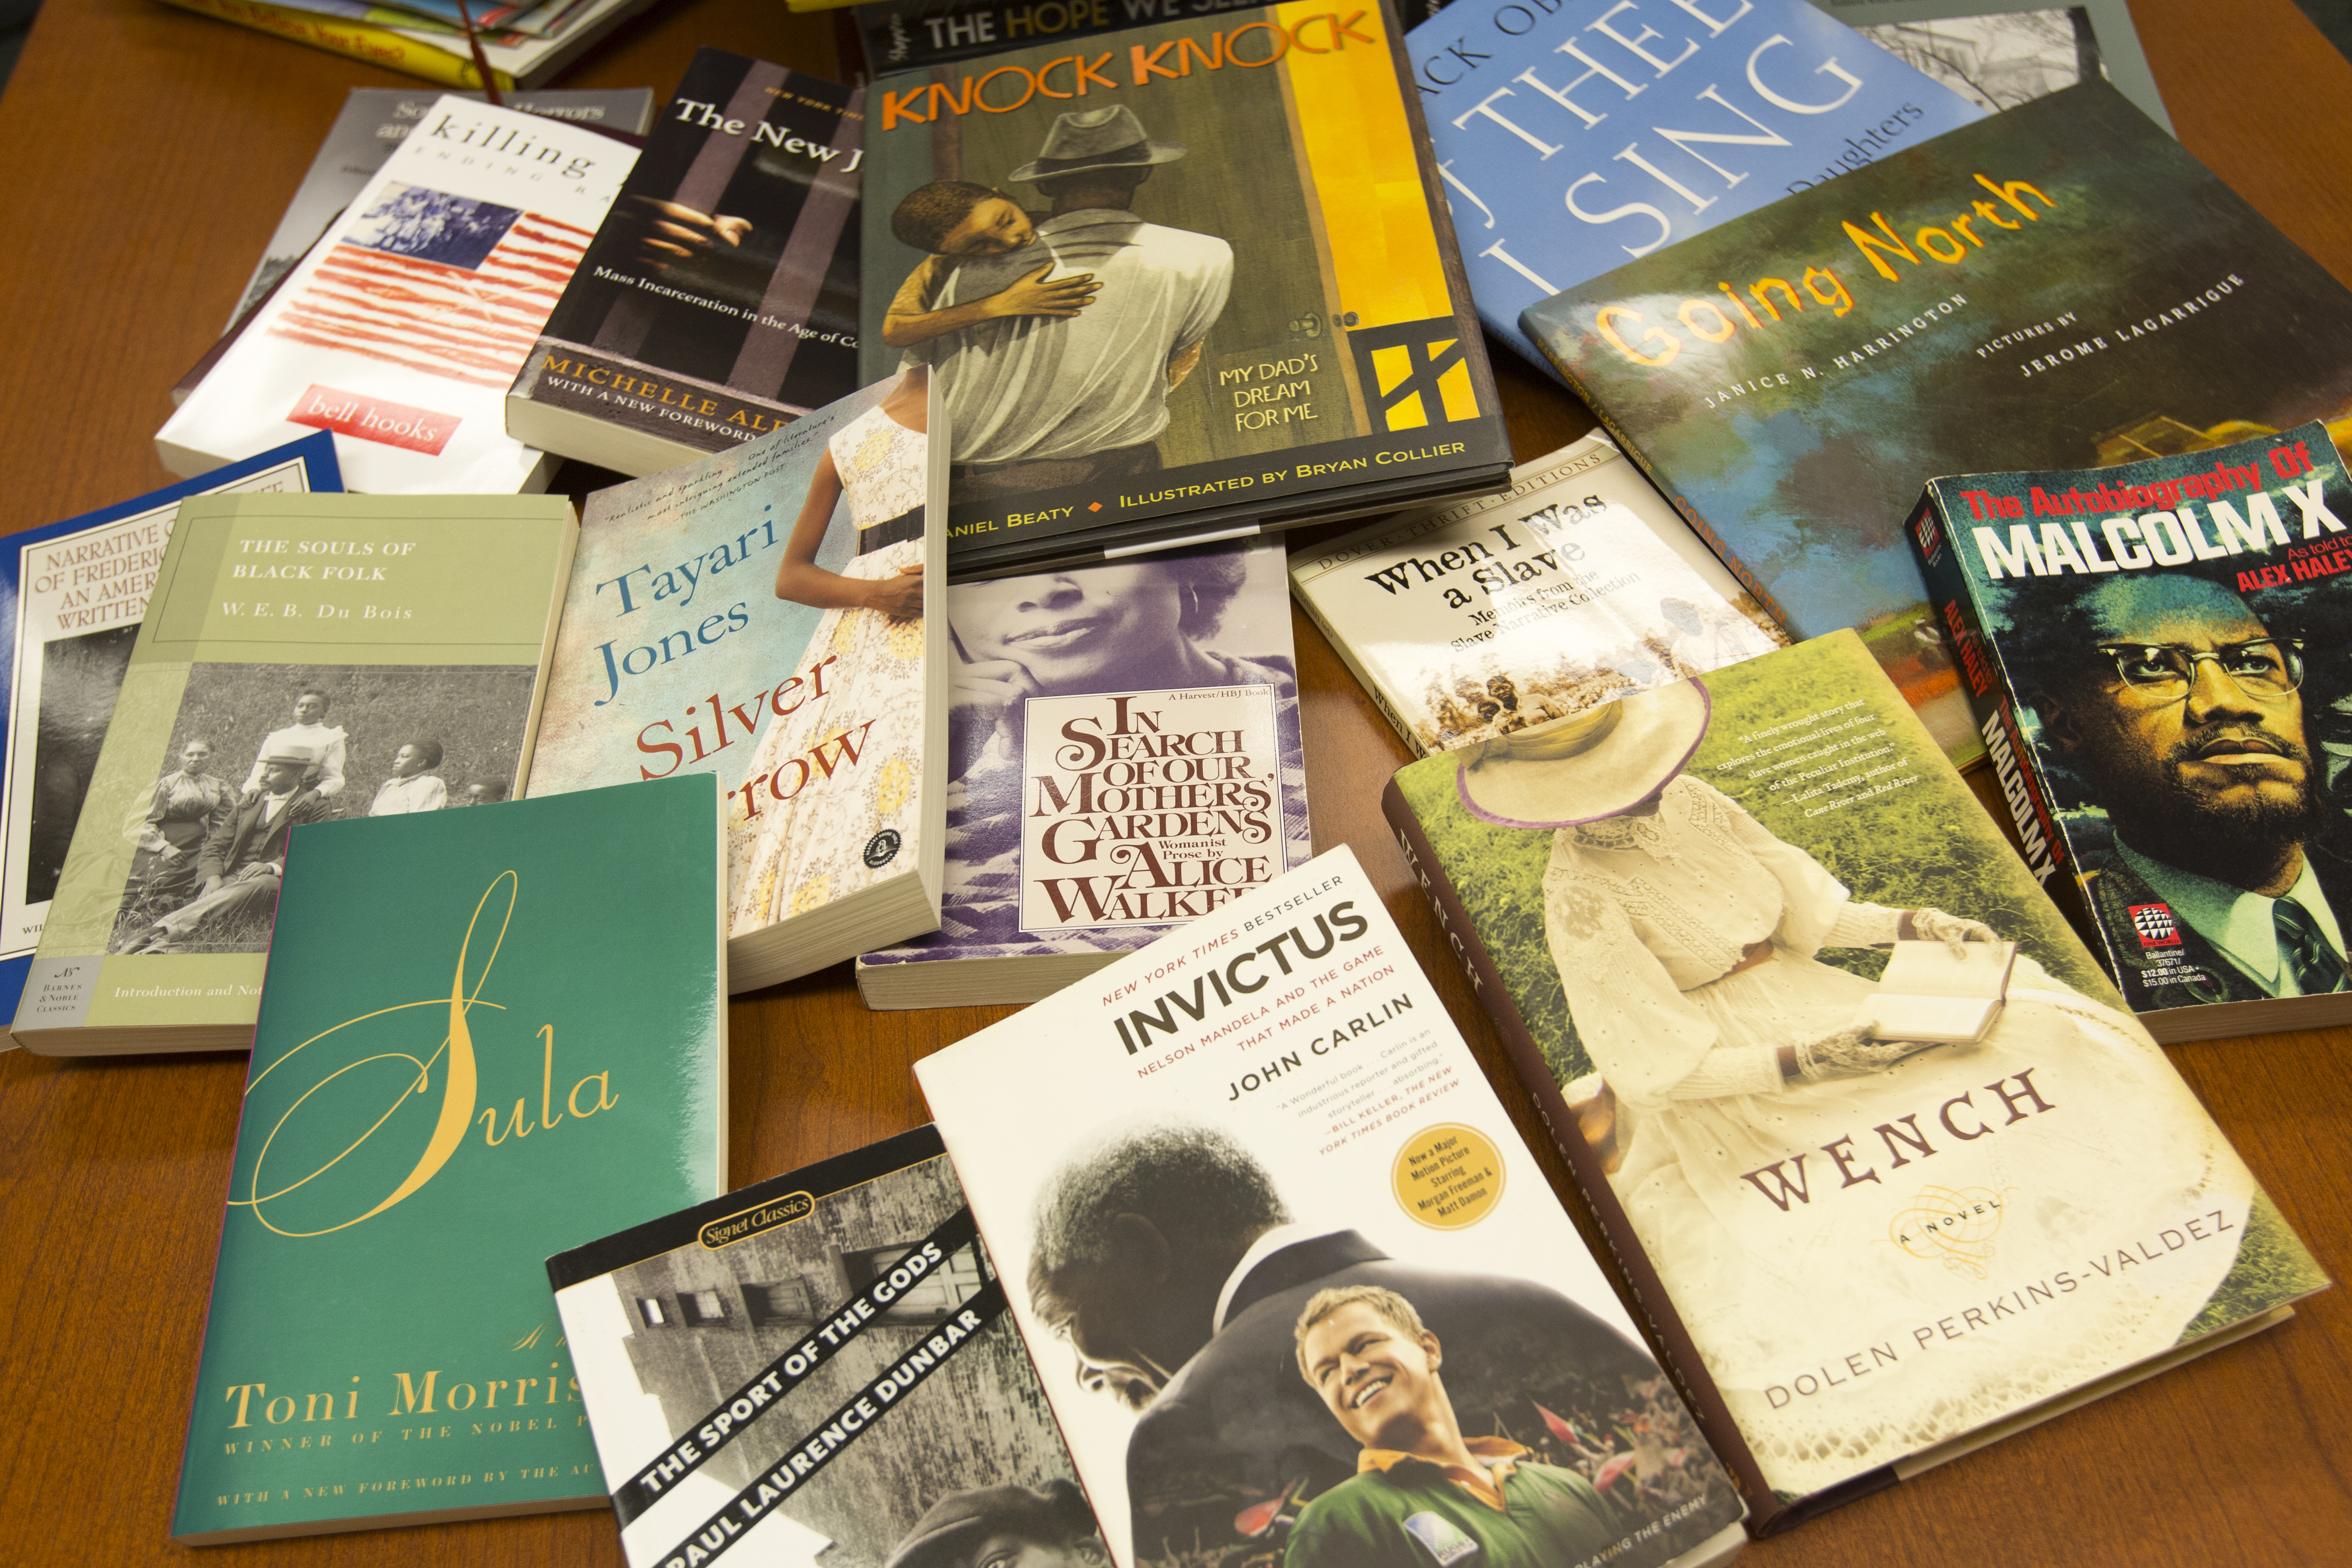 UNL’s Institute for Ethnic Studies sends books to Ferguson Library